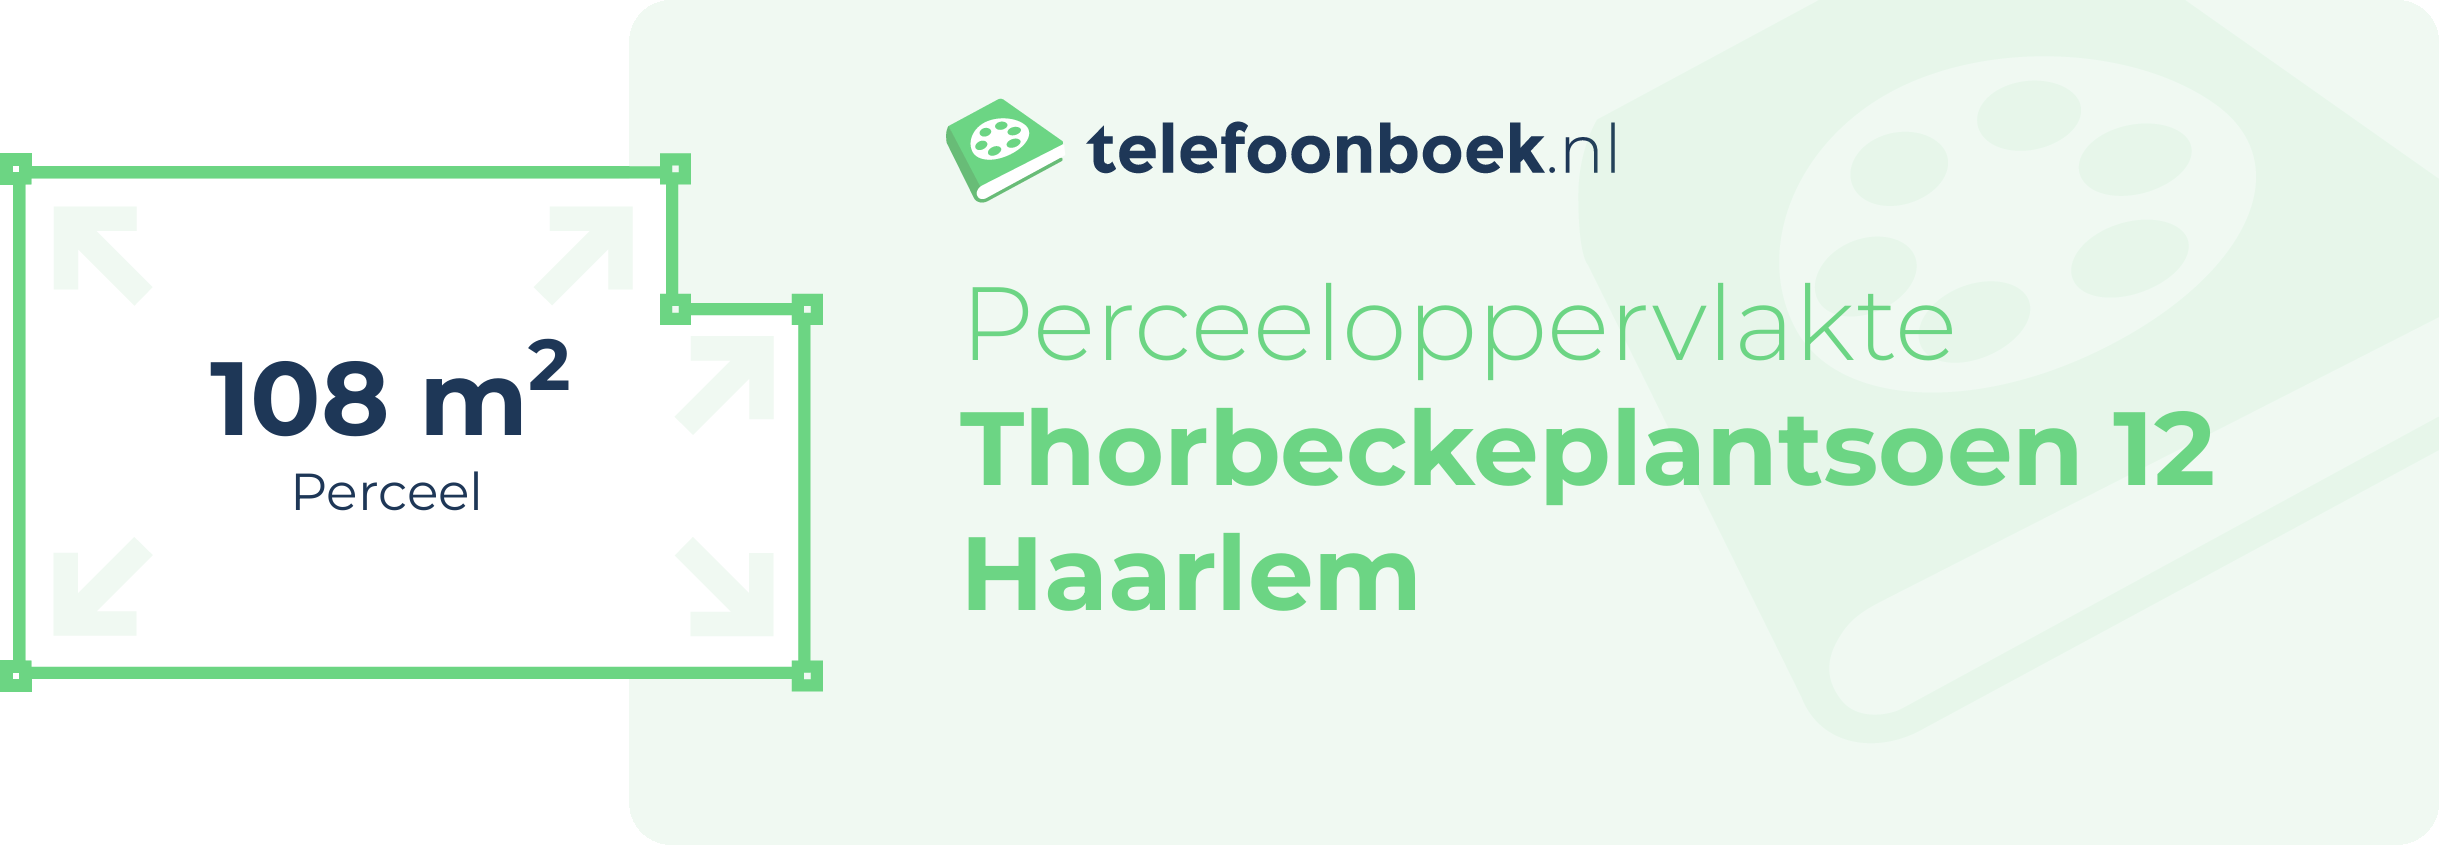 Perceeloppervlakte Thorbeckeplantsoen 12 Haarlem